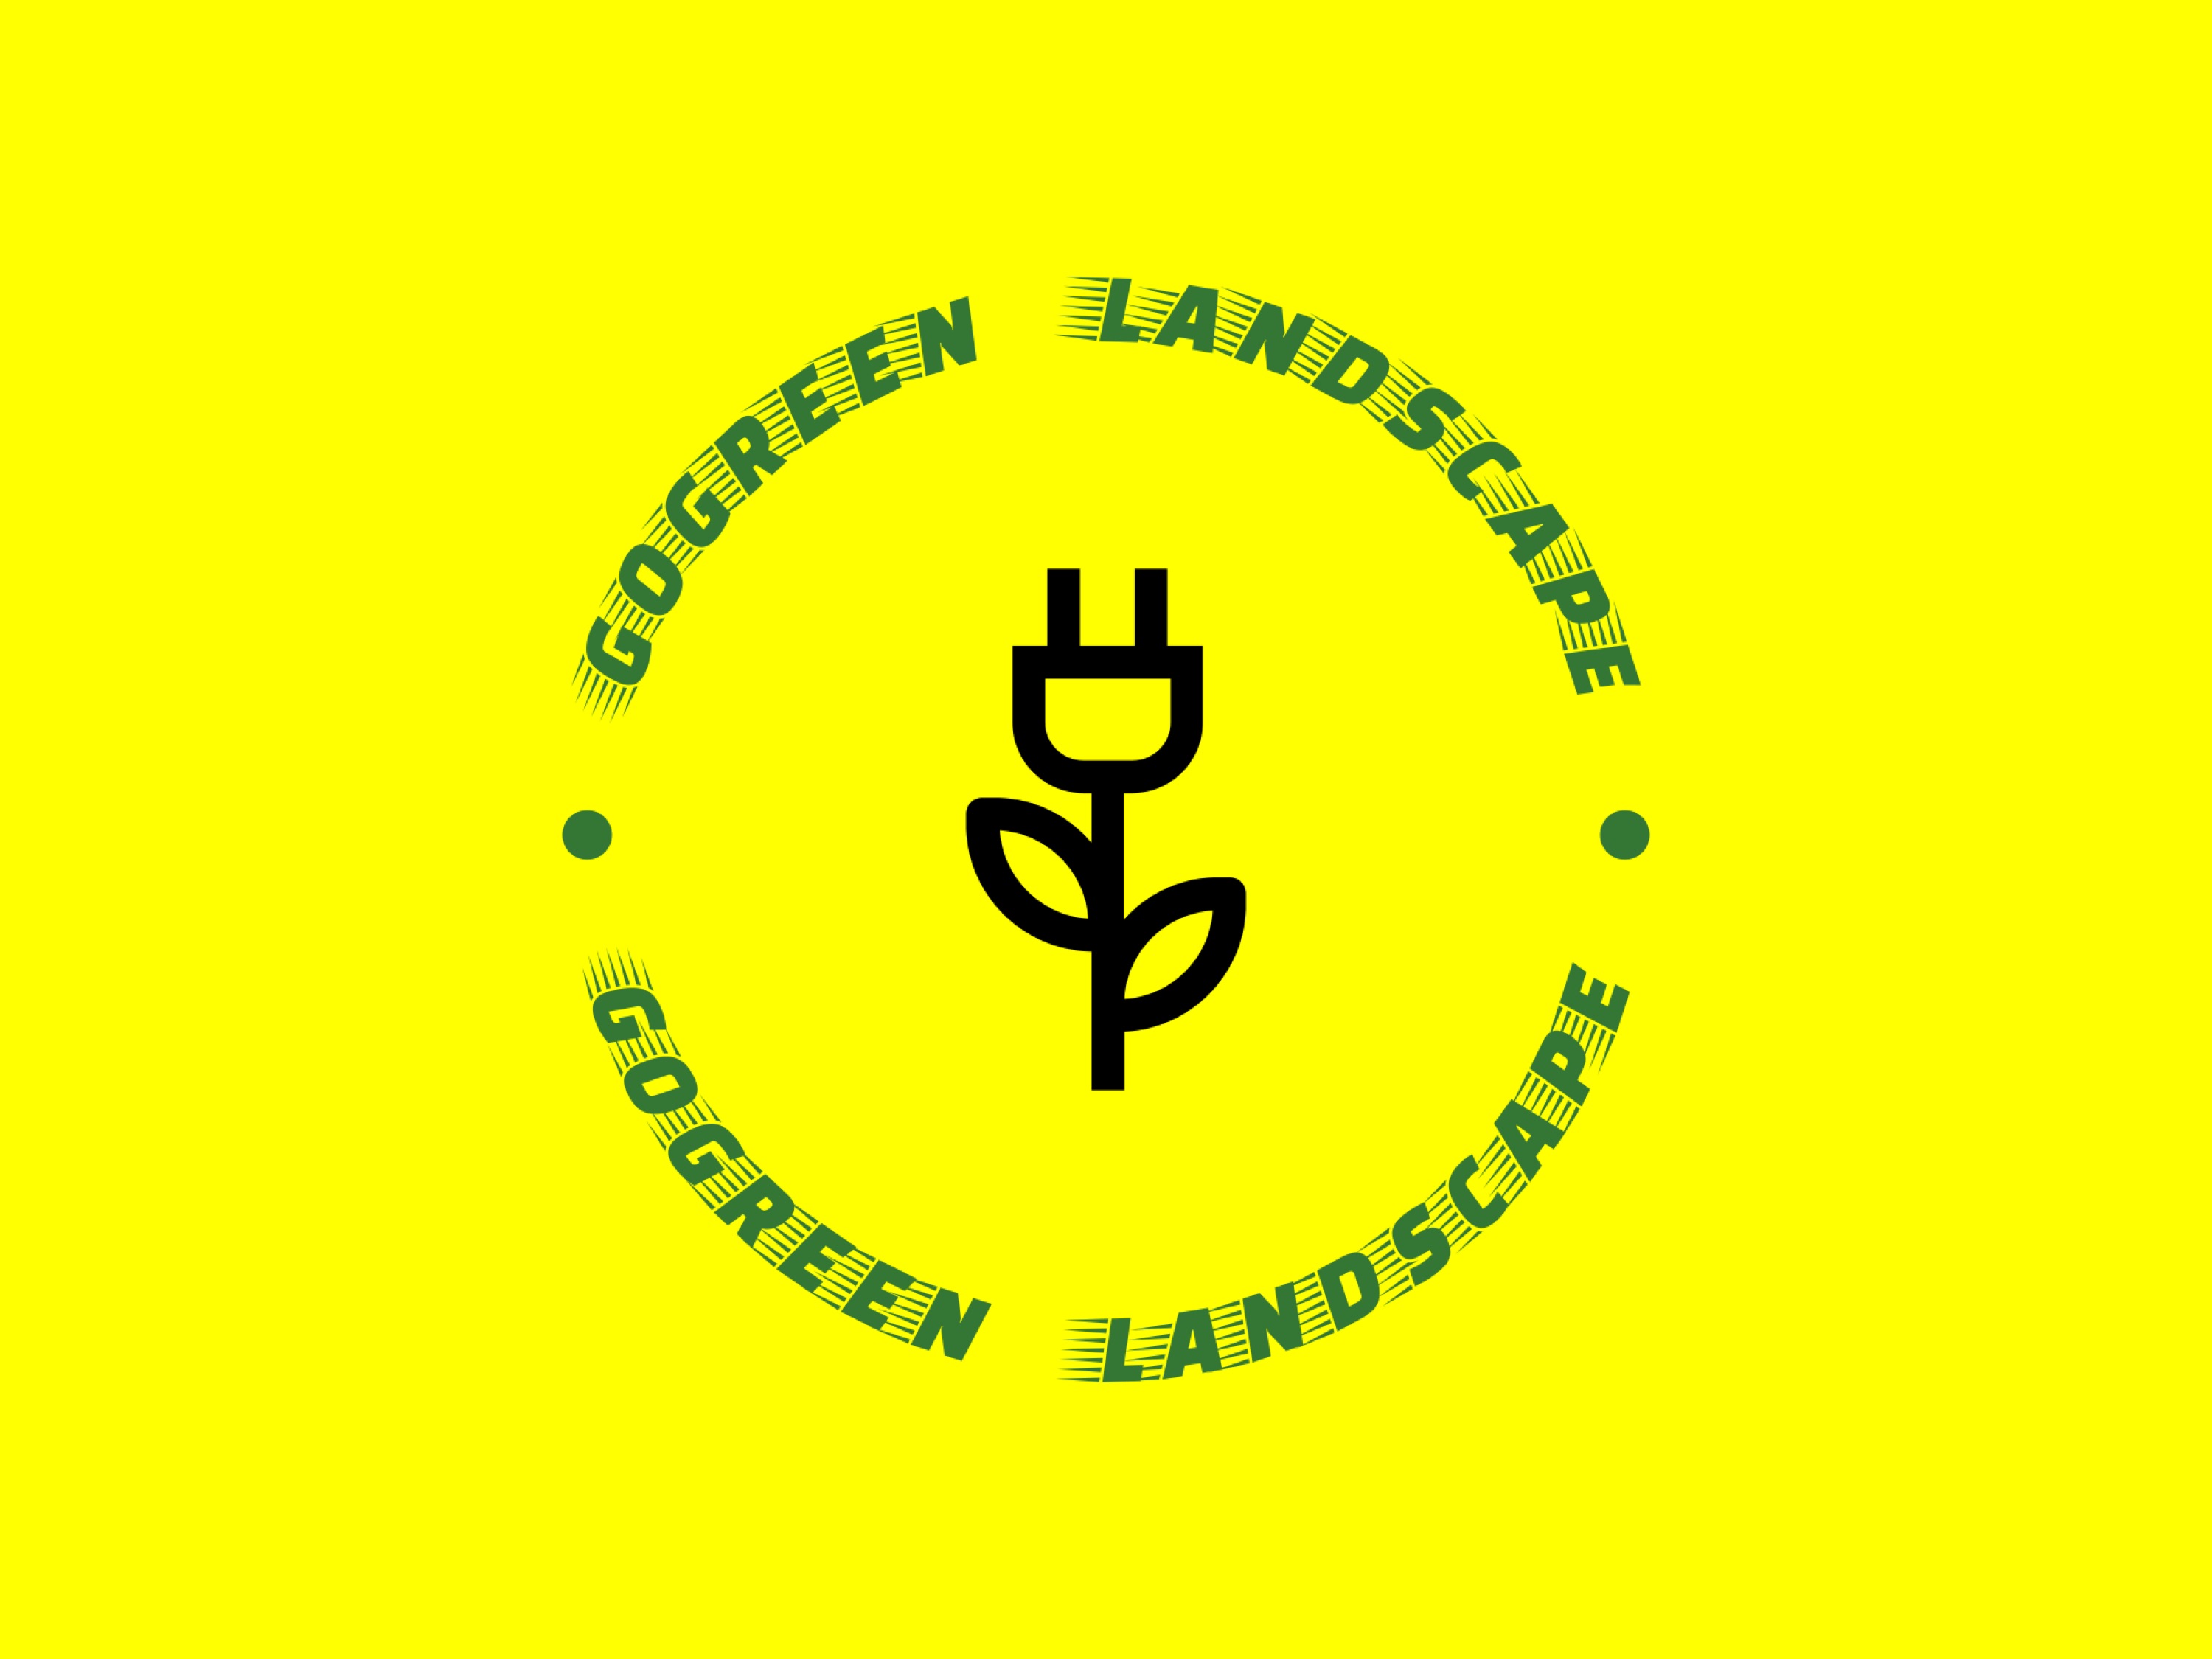 Go Green Landscape Logo